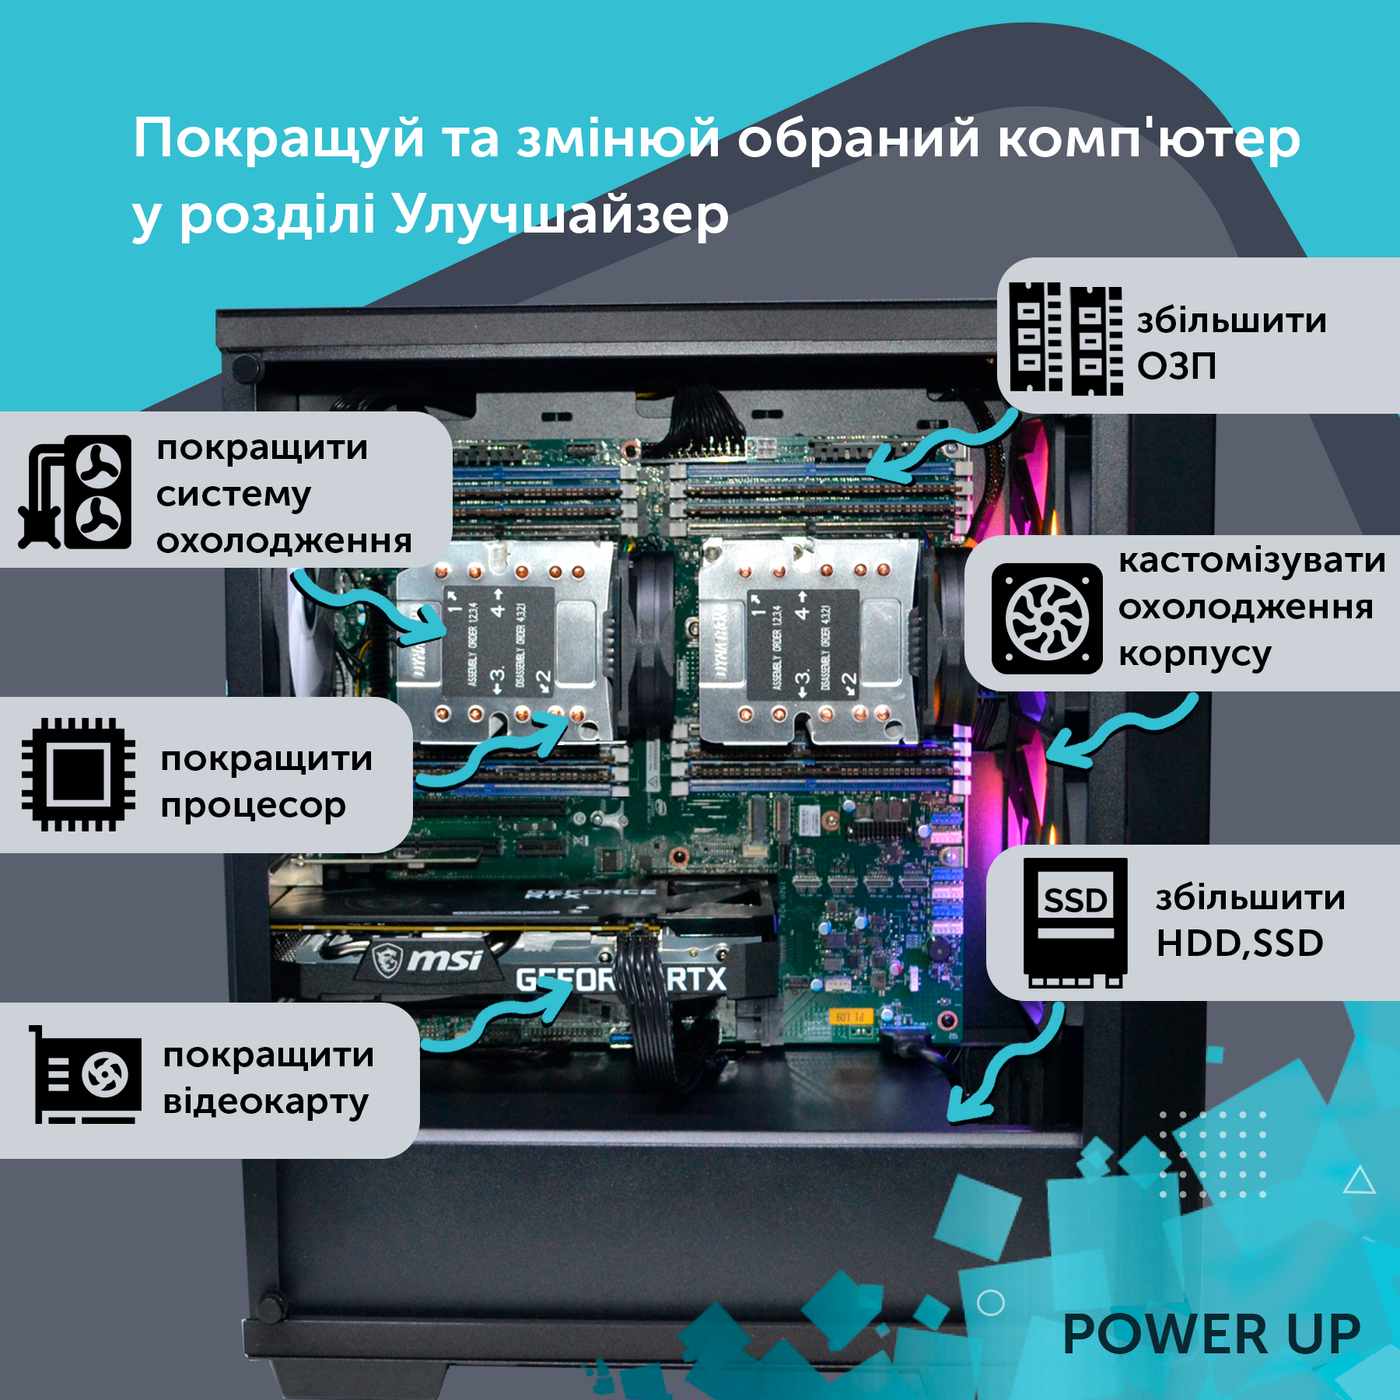 Рабочая станция PowerUp Desktop #152 Ryzen 9 5900x/32 GB/SSD 512GB/GeForce GTX 1650 4GB